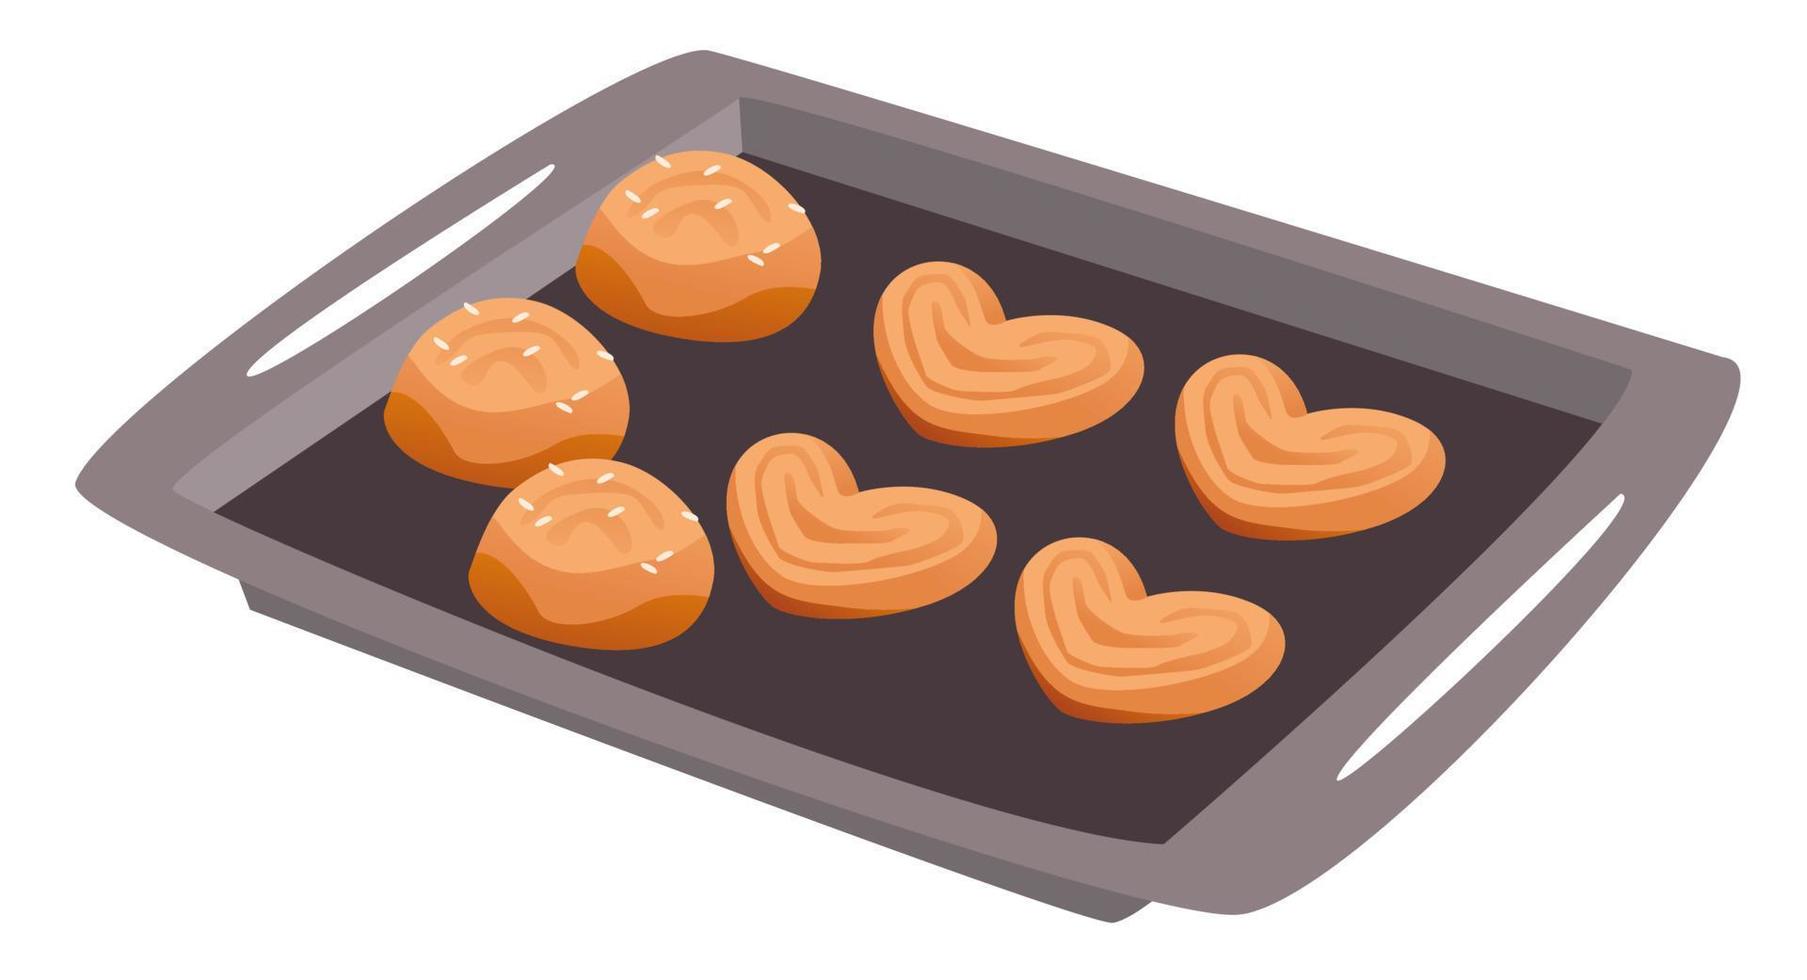 Cookies and buns on a baking sheet. Homemade baking. Cartoon vector illustration.